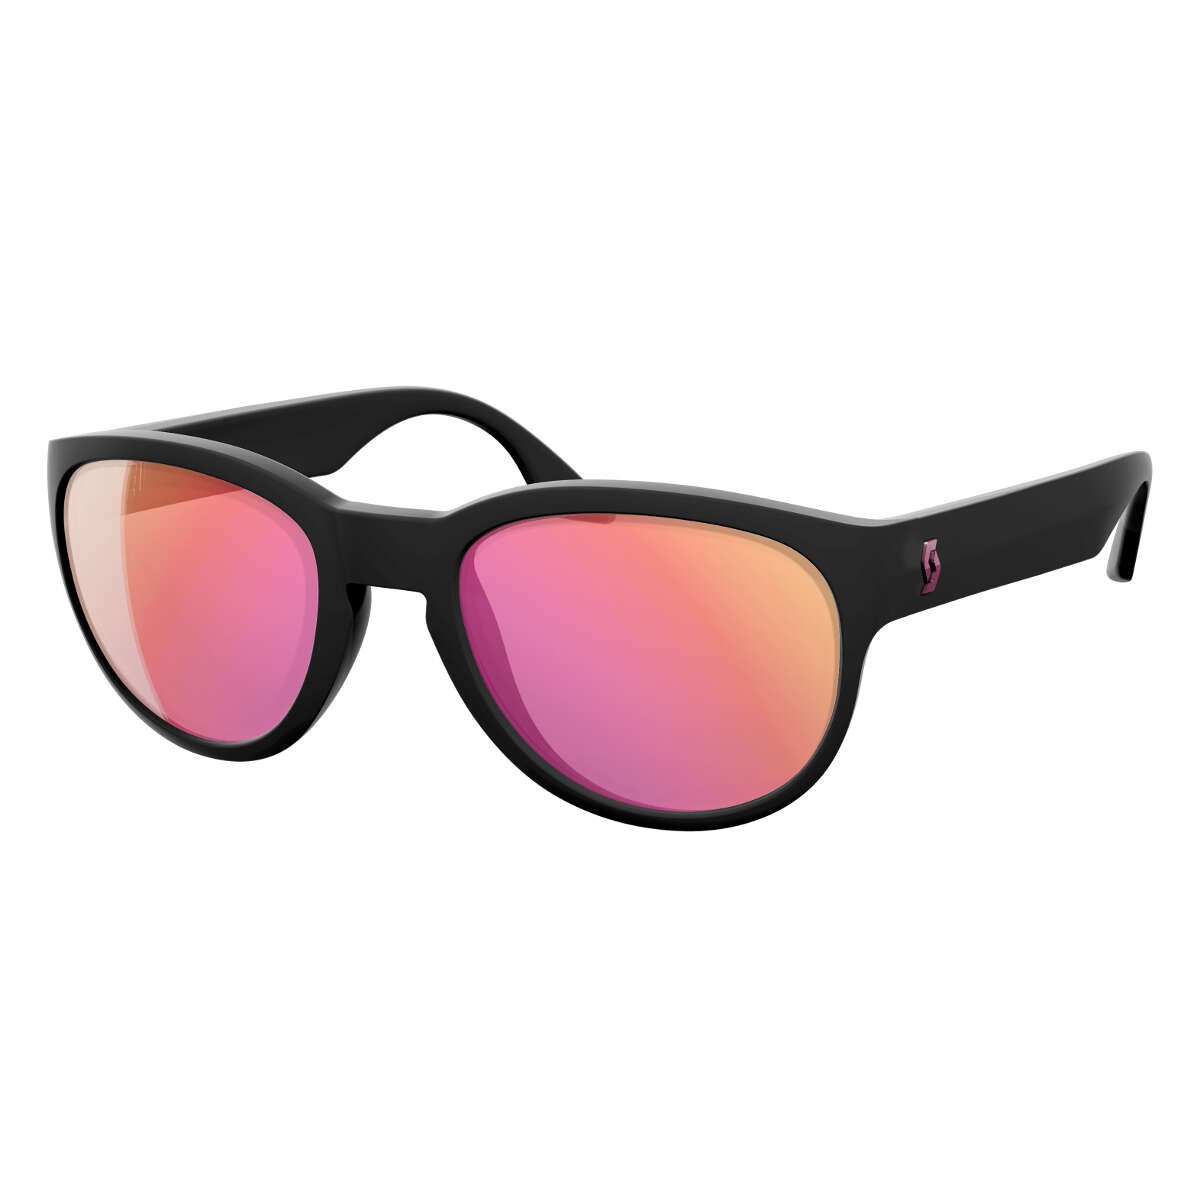 Scott Sunglasses Sway Black - Pink Chrome